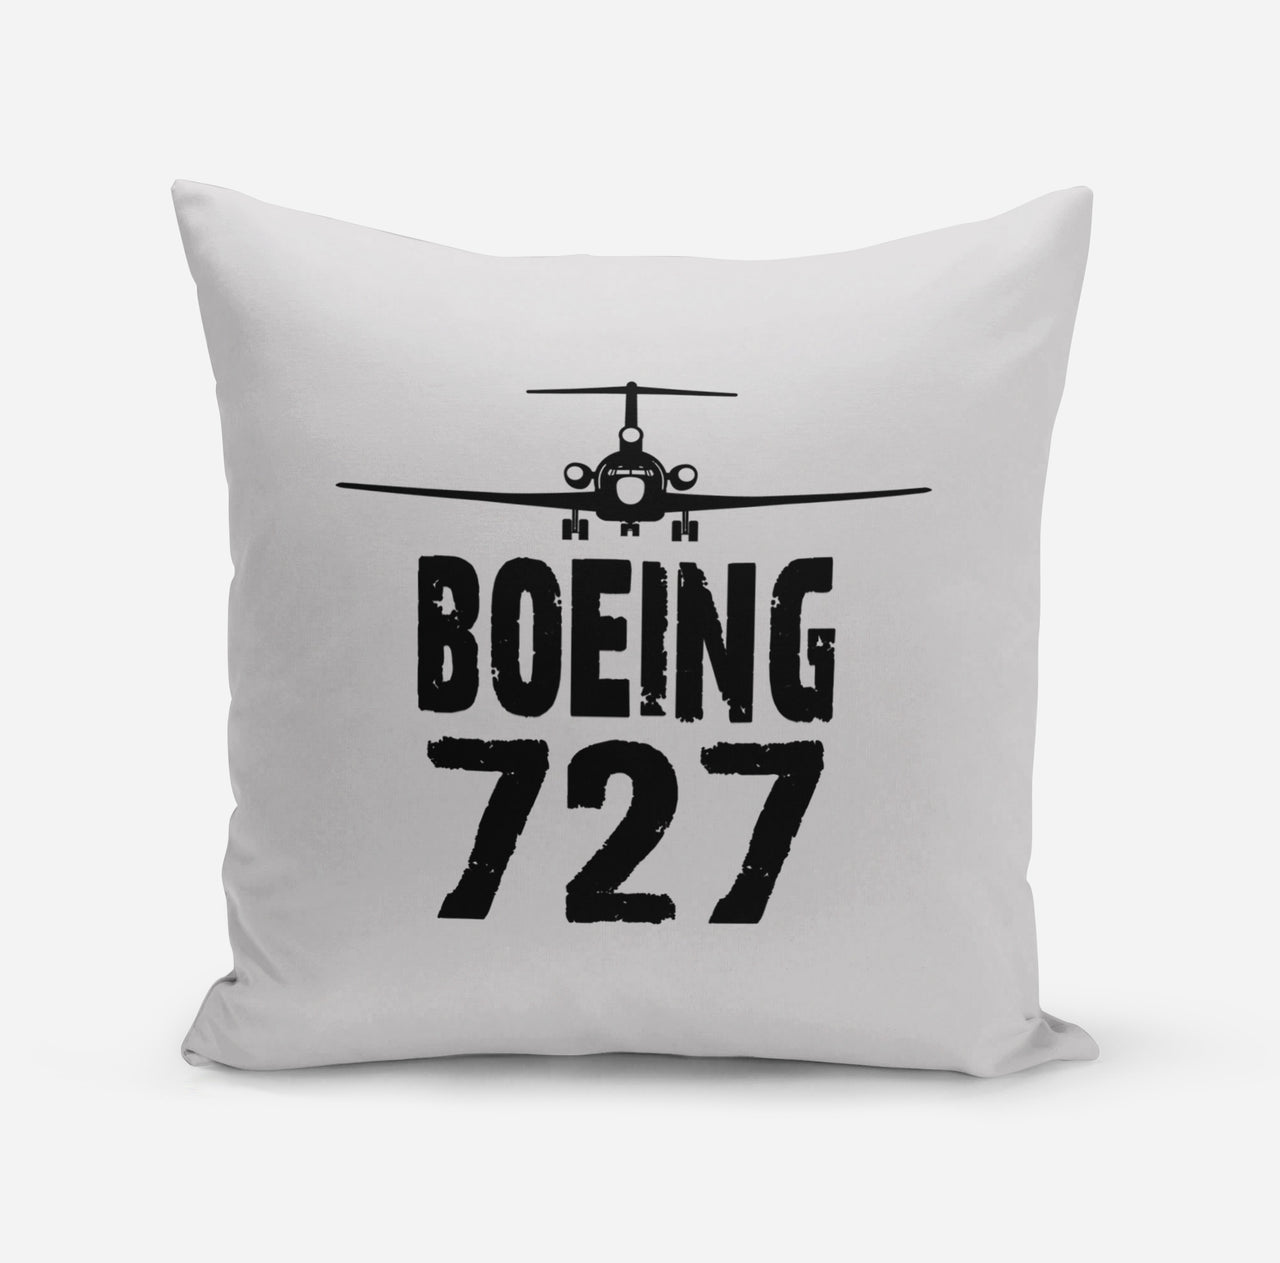 Boeing 727 & Plane Designed Pillows